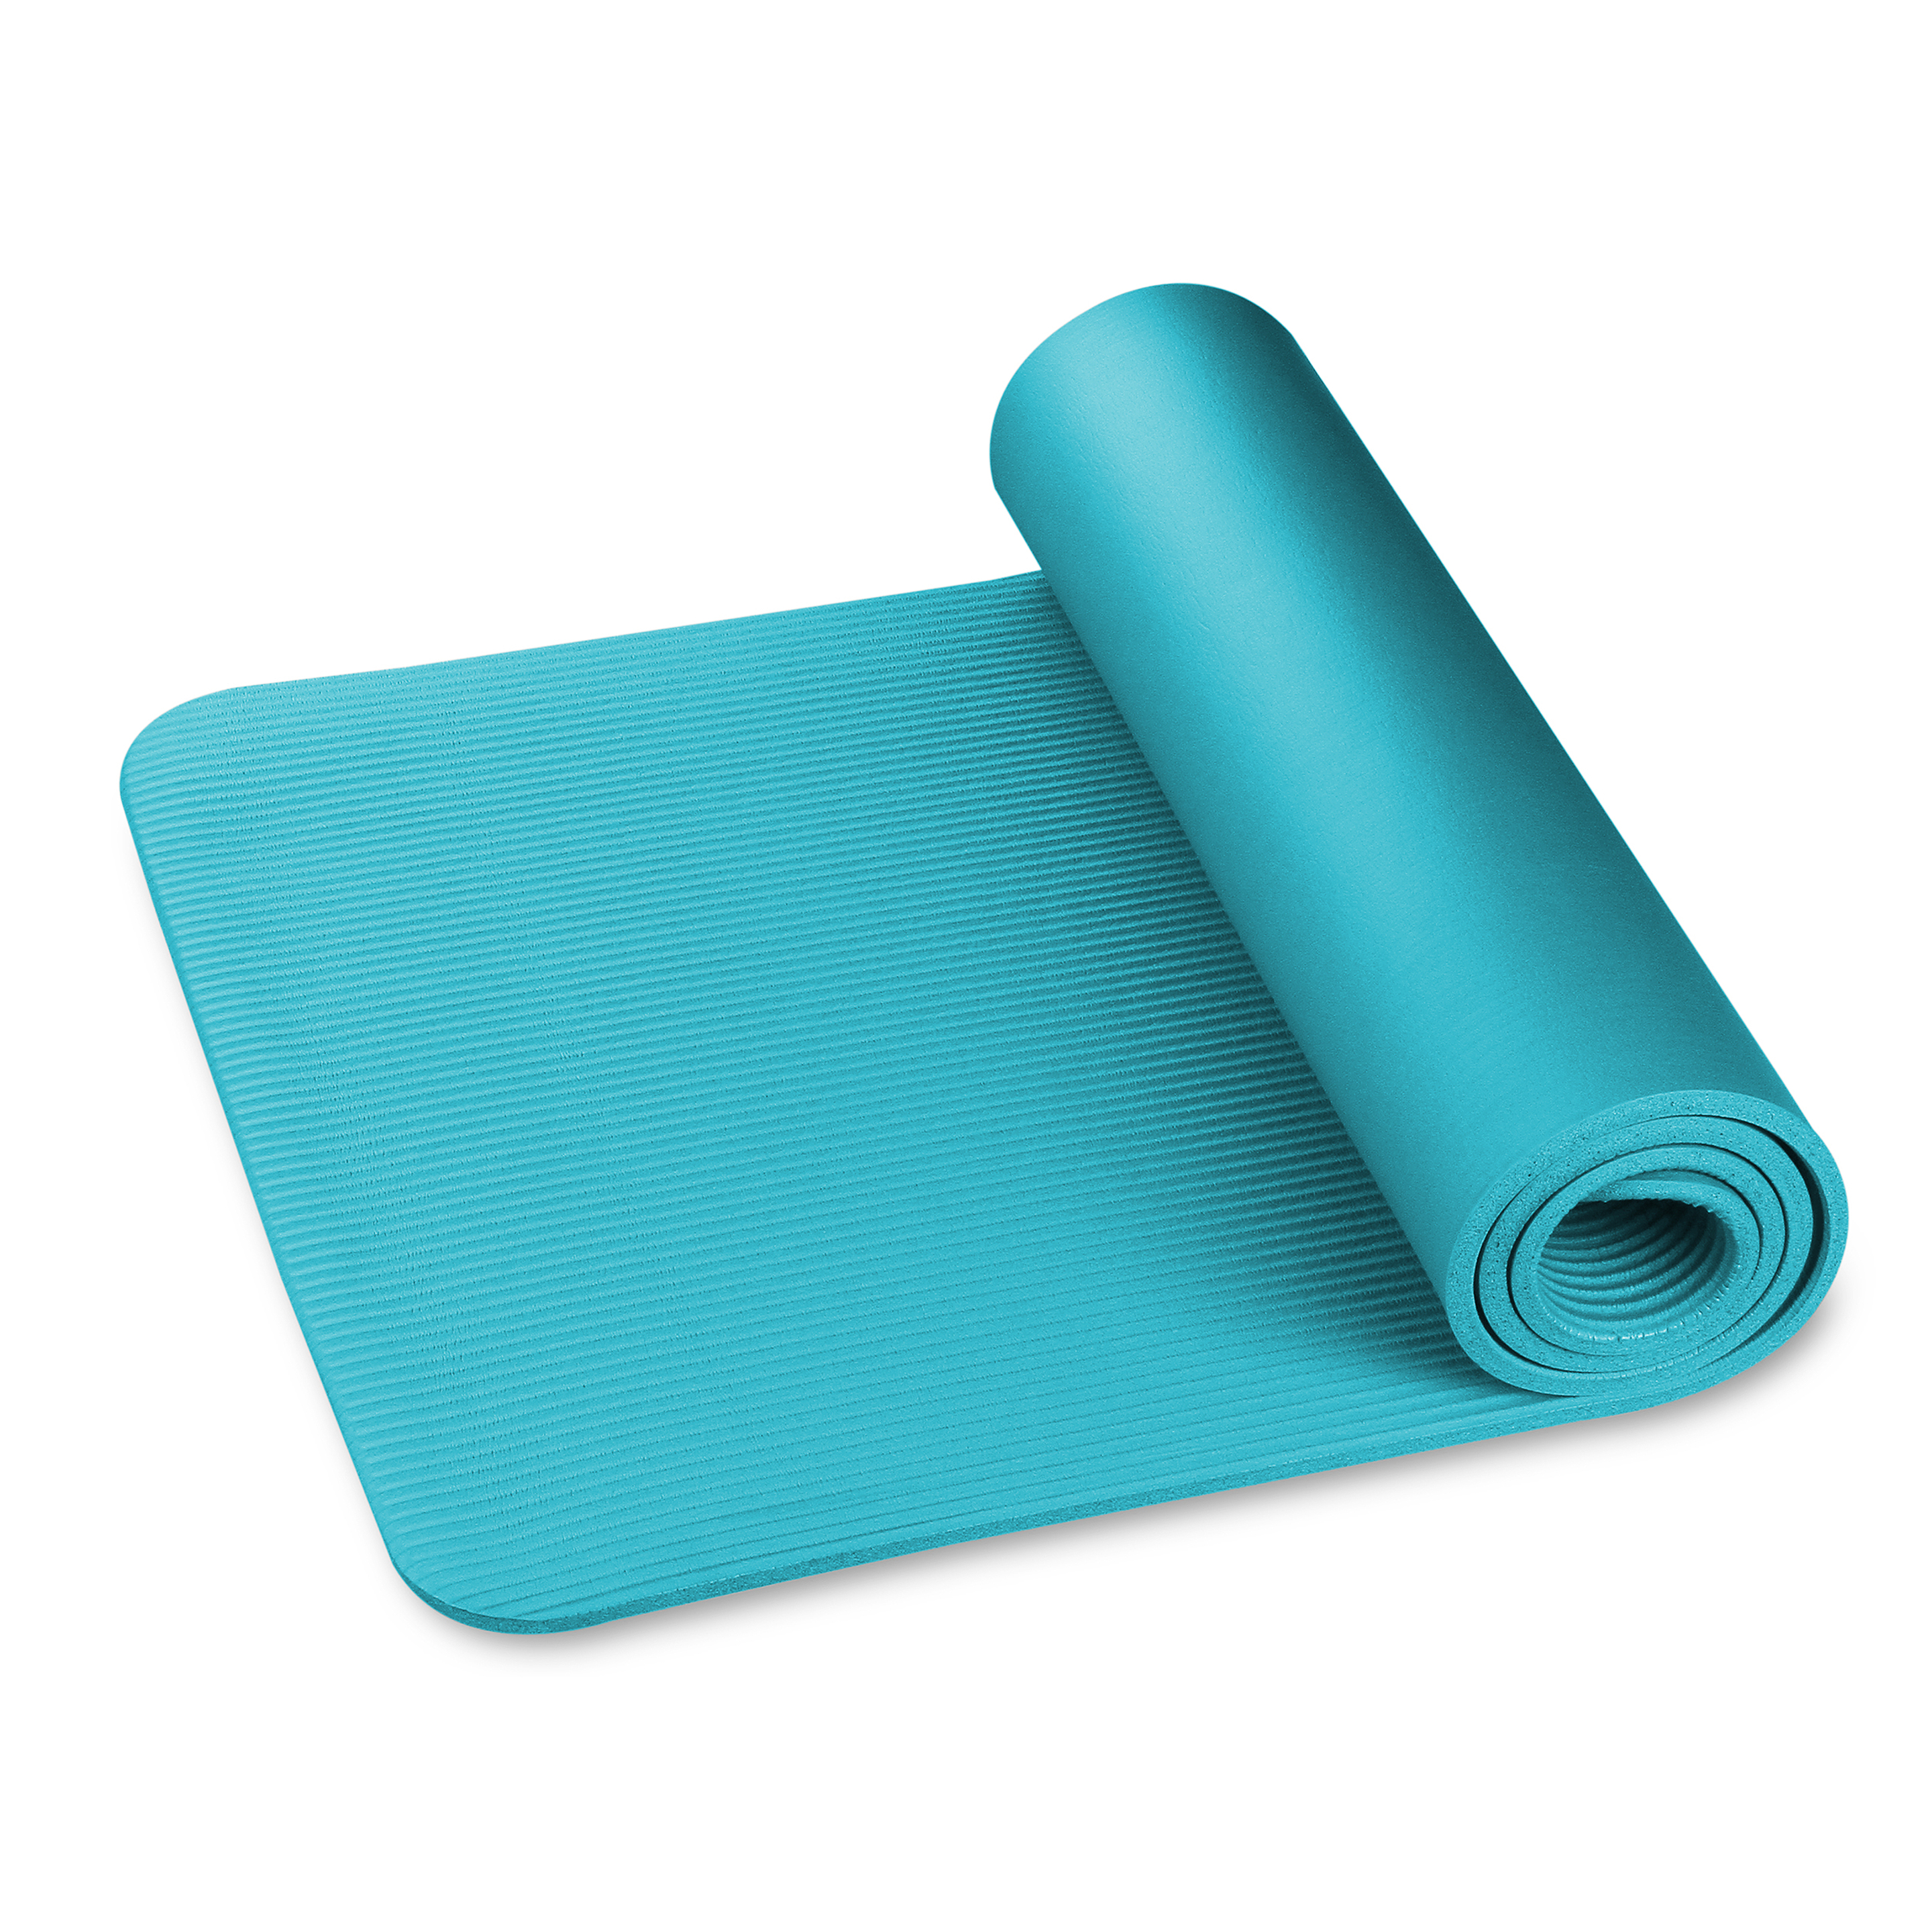 Esterilla De Yoga Y Fitness Nbr Indigo 173 * 61 * 1,5 Cm - azul-aqua - 